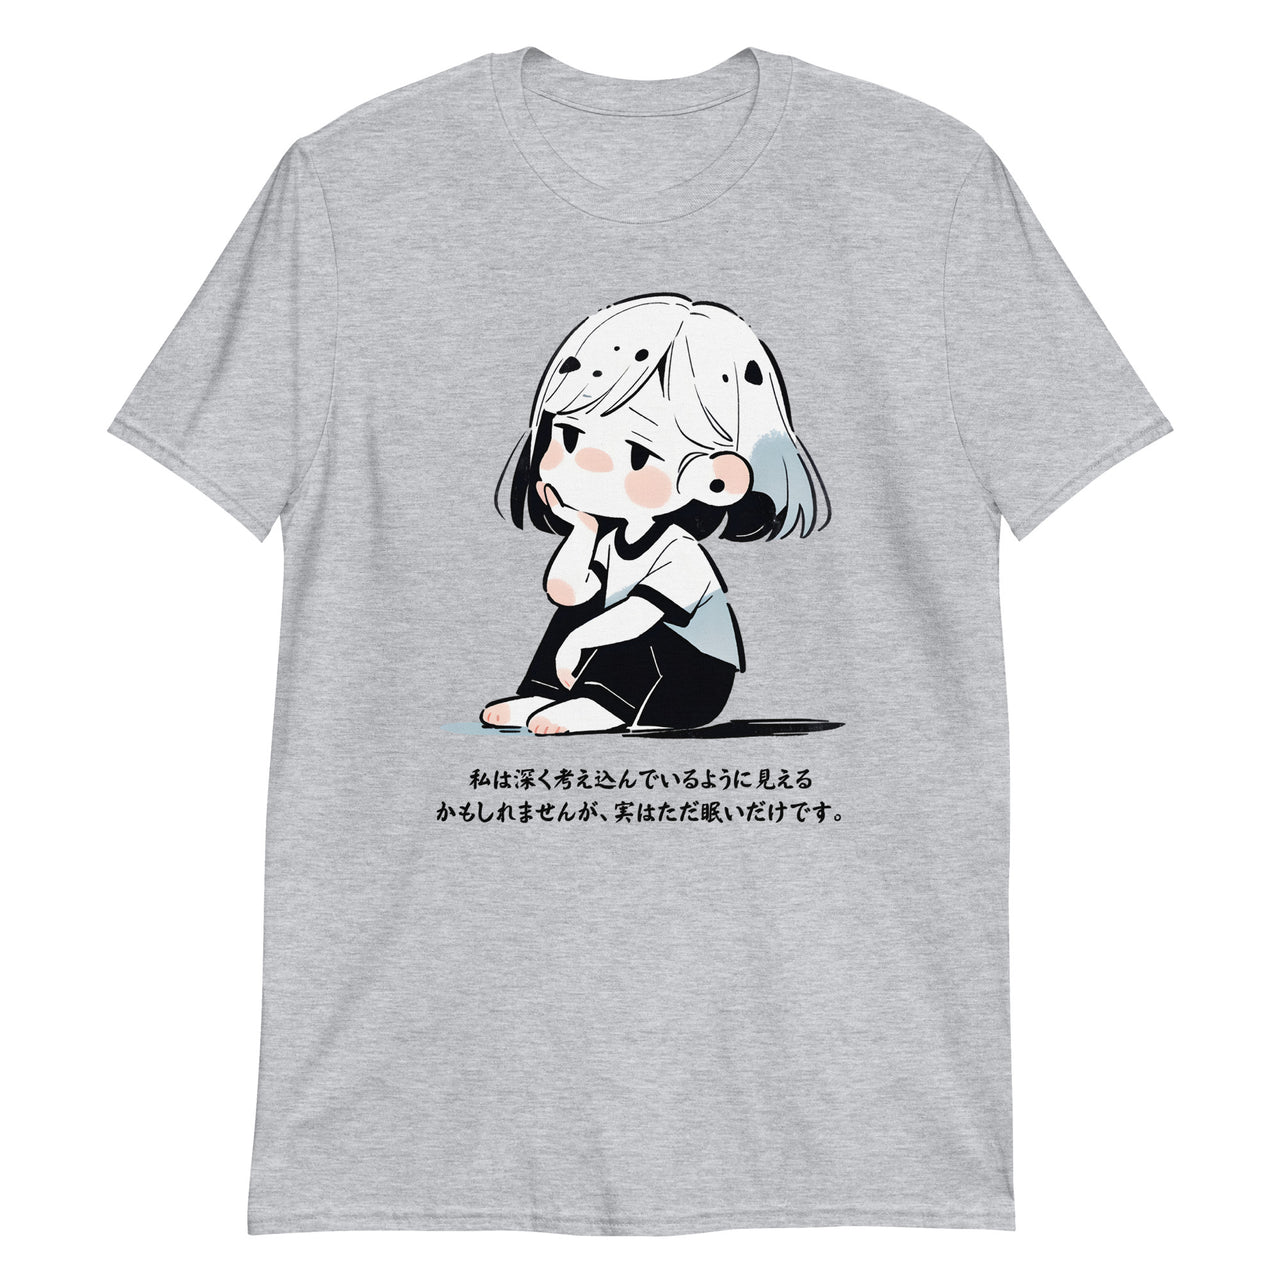 Manga Girl's Sleepy Thoughts in Japanese T-Shirt